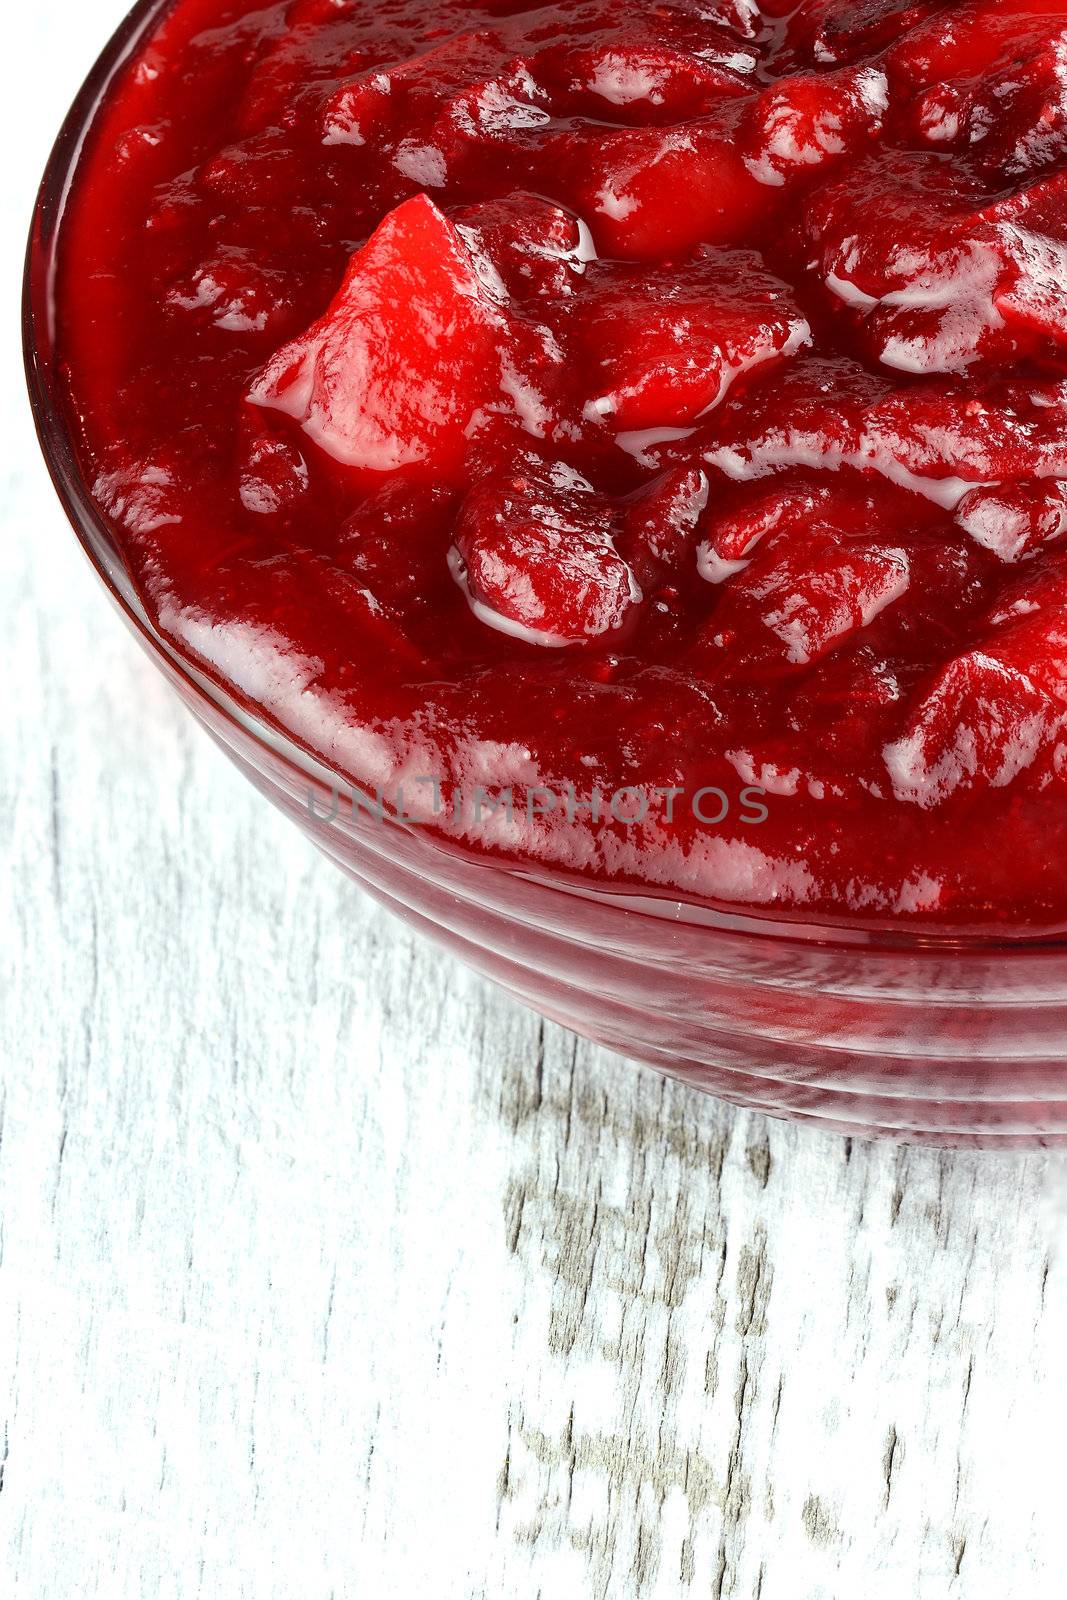 Cranberry Apple Sauce by StephanieFrey